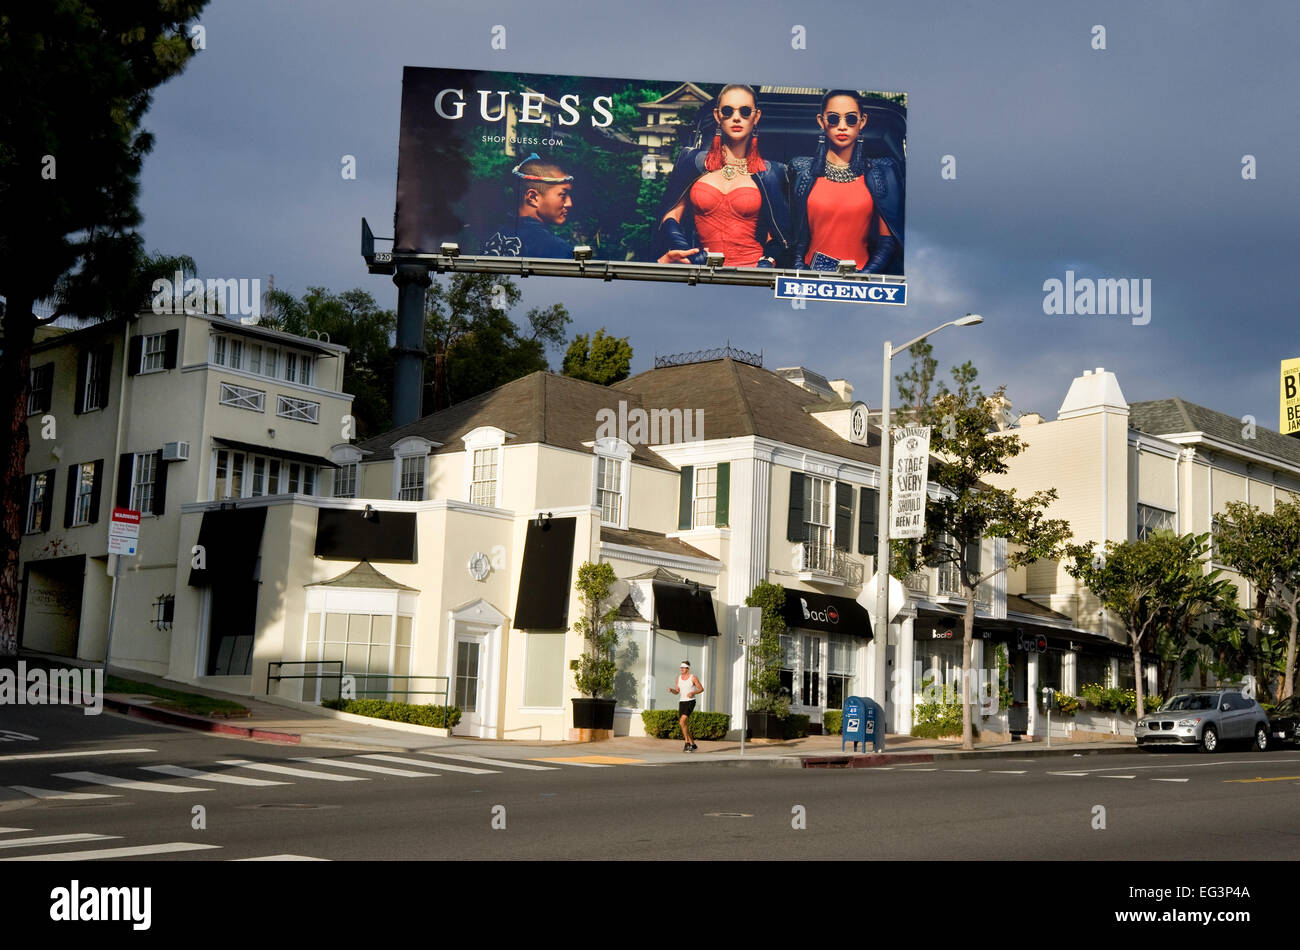 Sukkerrør Beundringsværdig Zoo om natten The Sunset Strip with billboard for Guess fashion Stock Photo - Alamy